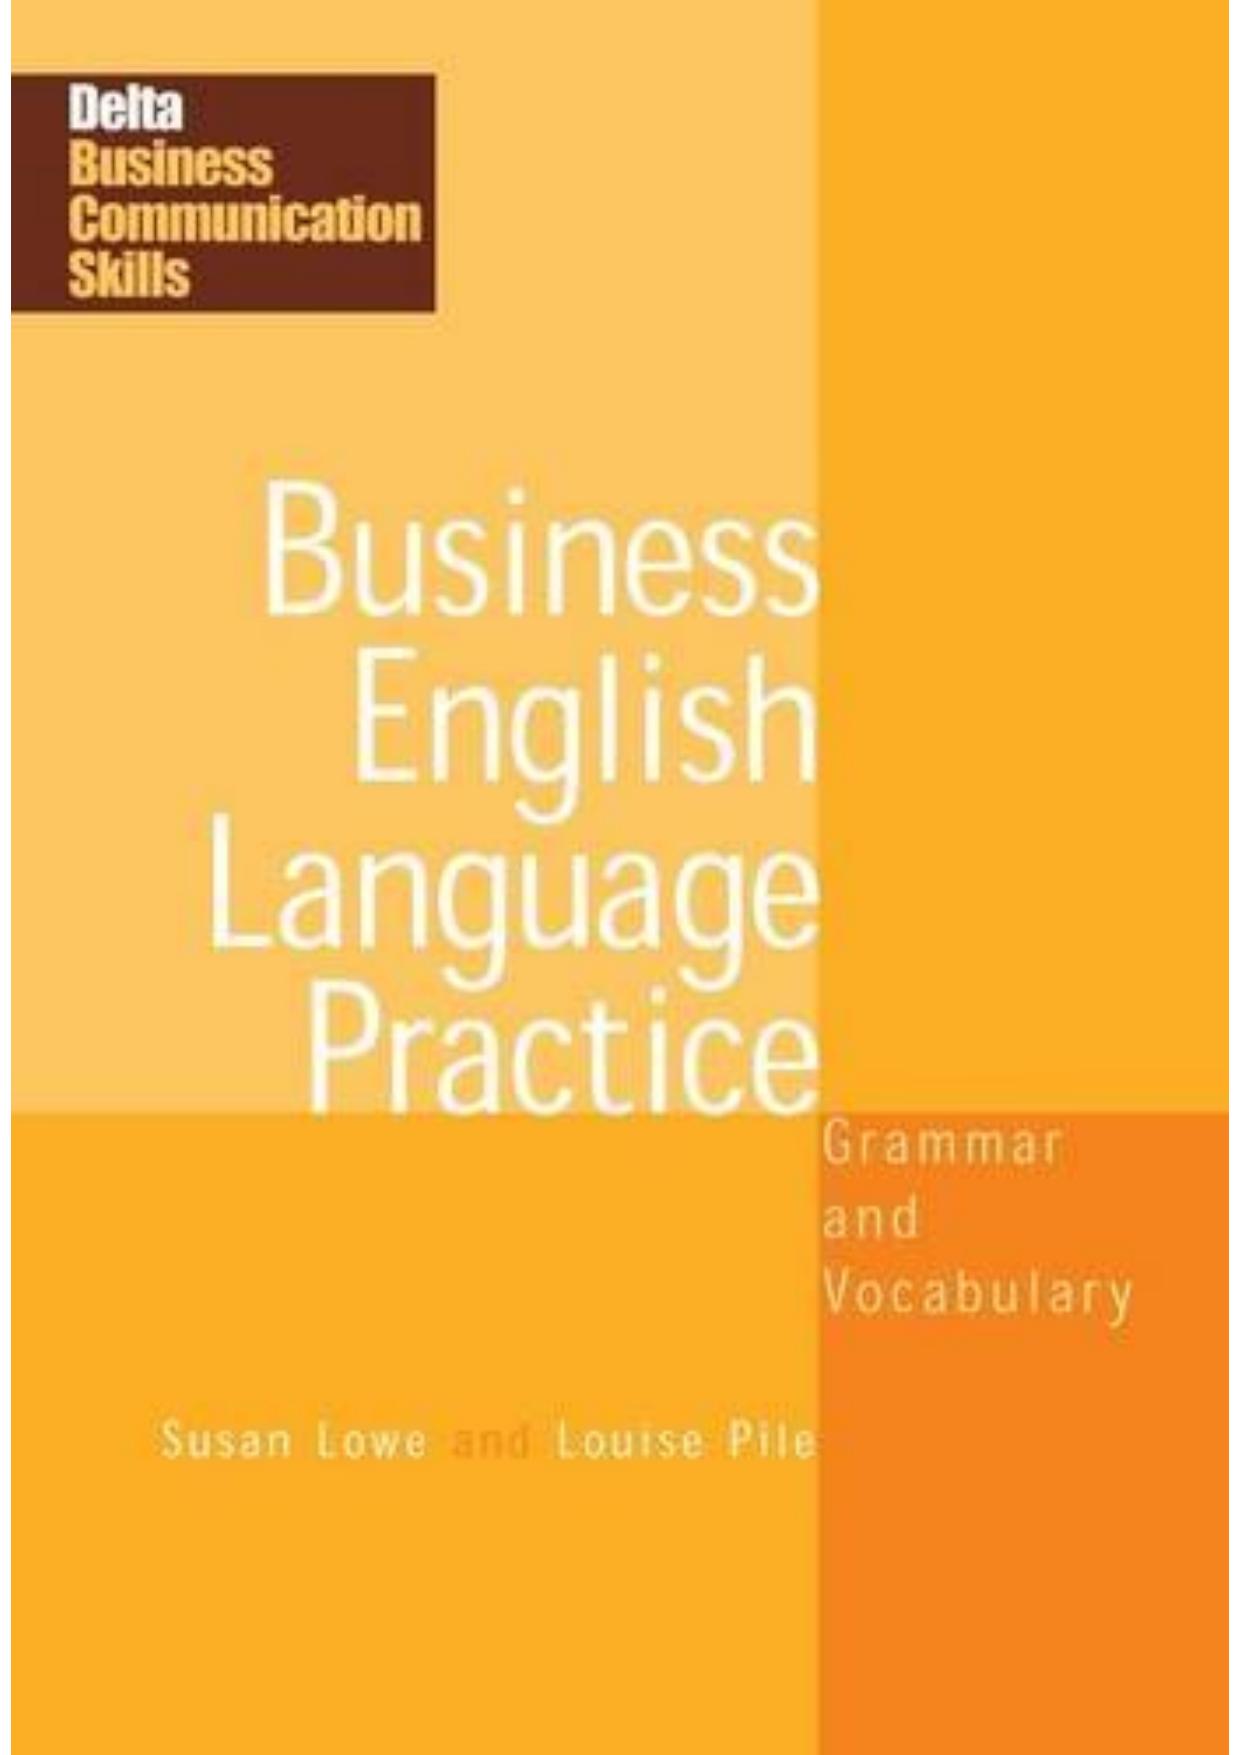 Business English Language Practice: Grammar and Vocabulary